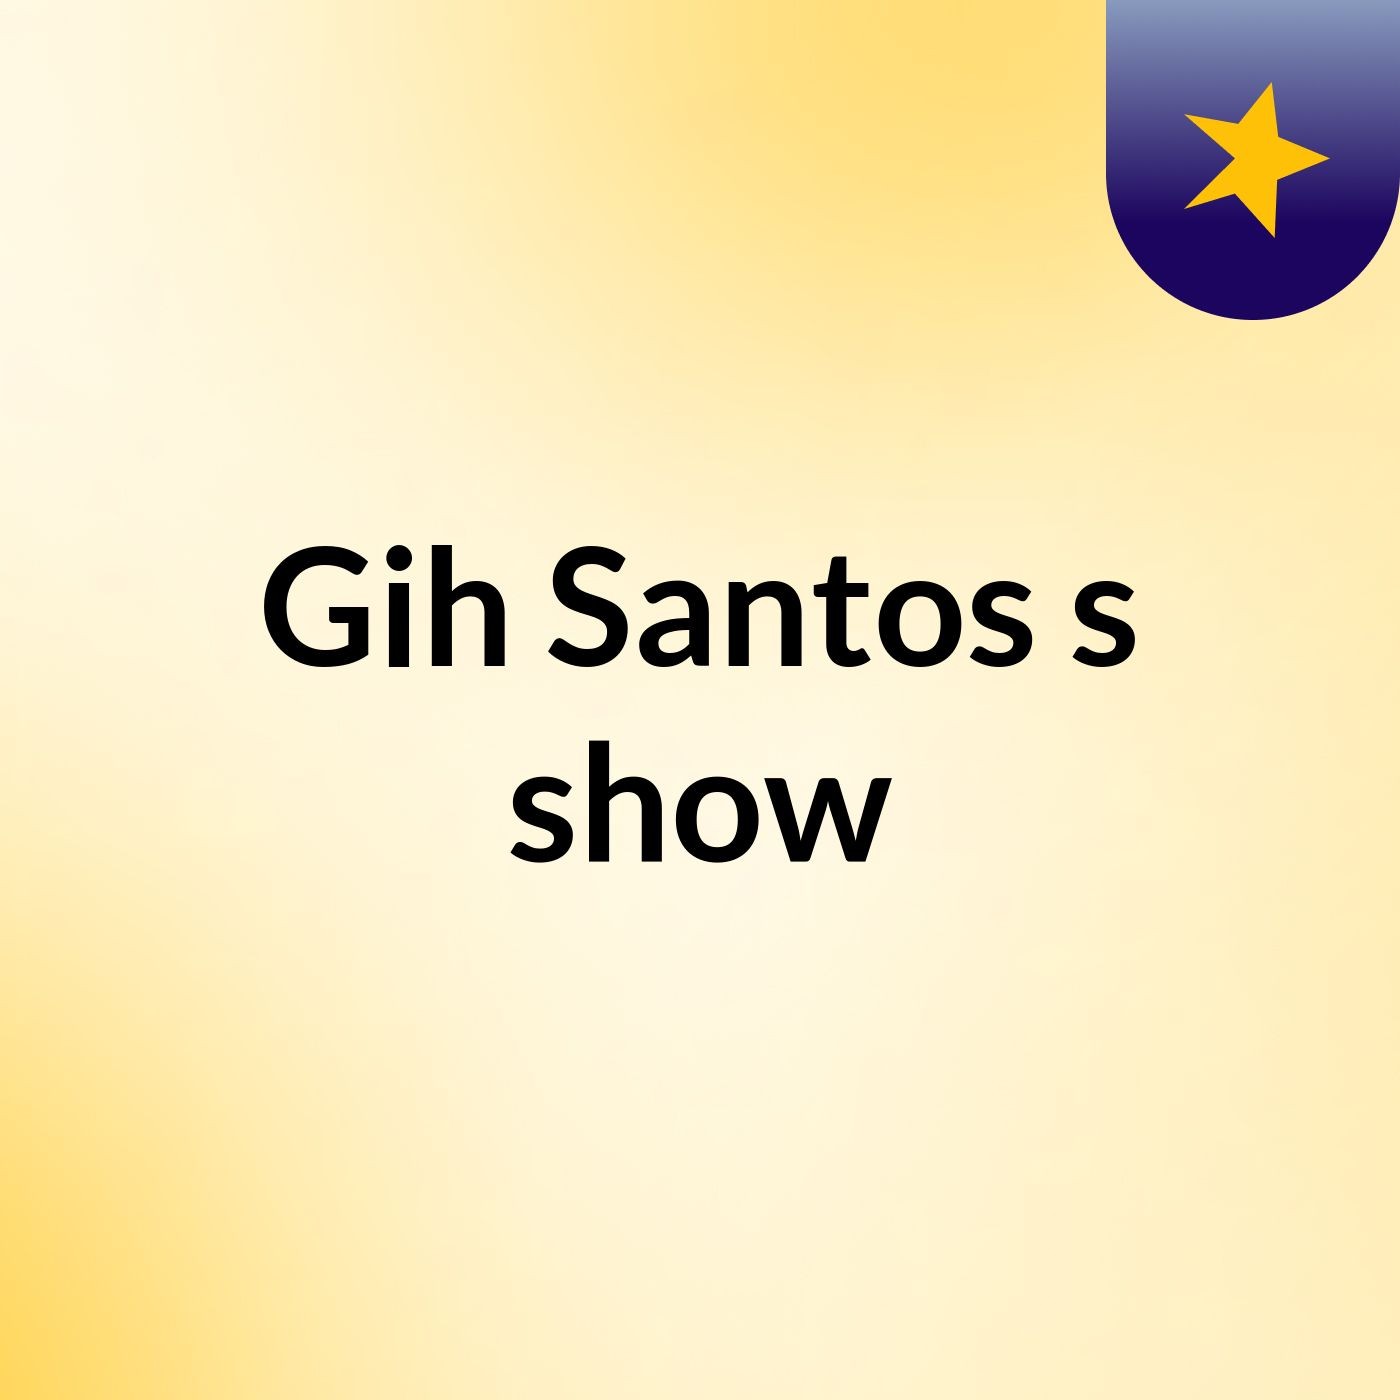 Gih Santos's show